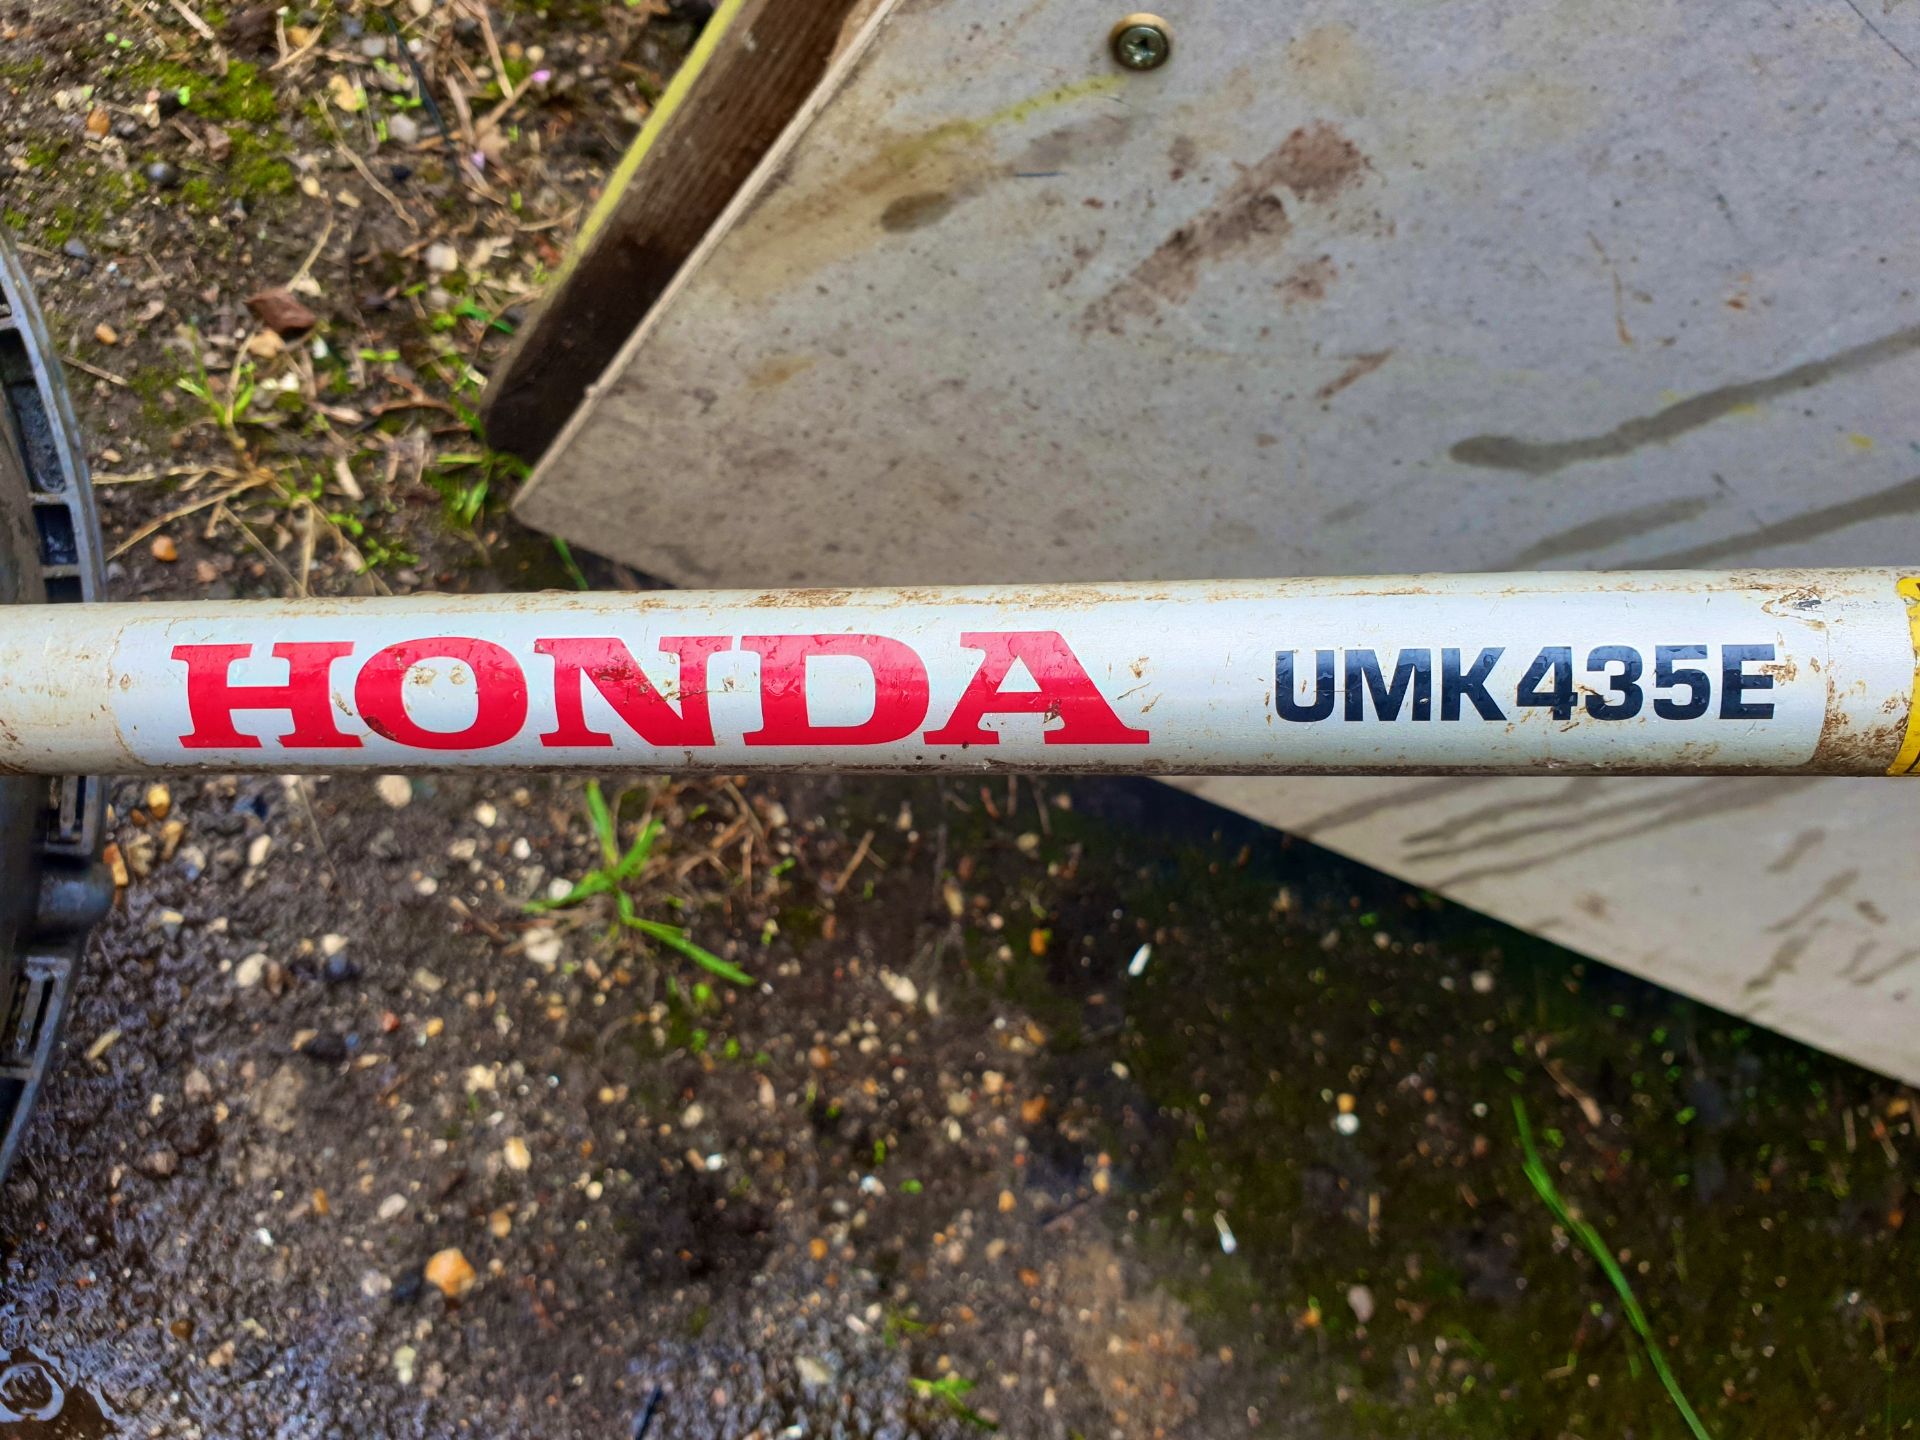 Honda 4 stroke Brush cutter - UMK435E - Good working condition - Image 3 of 3